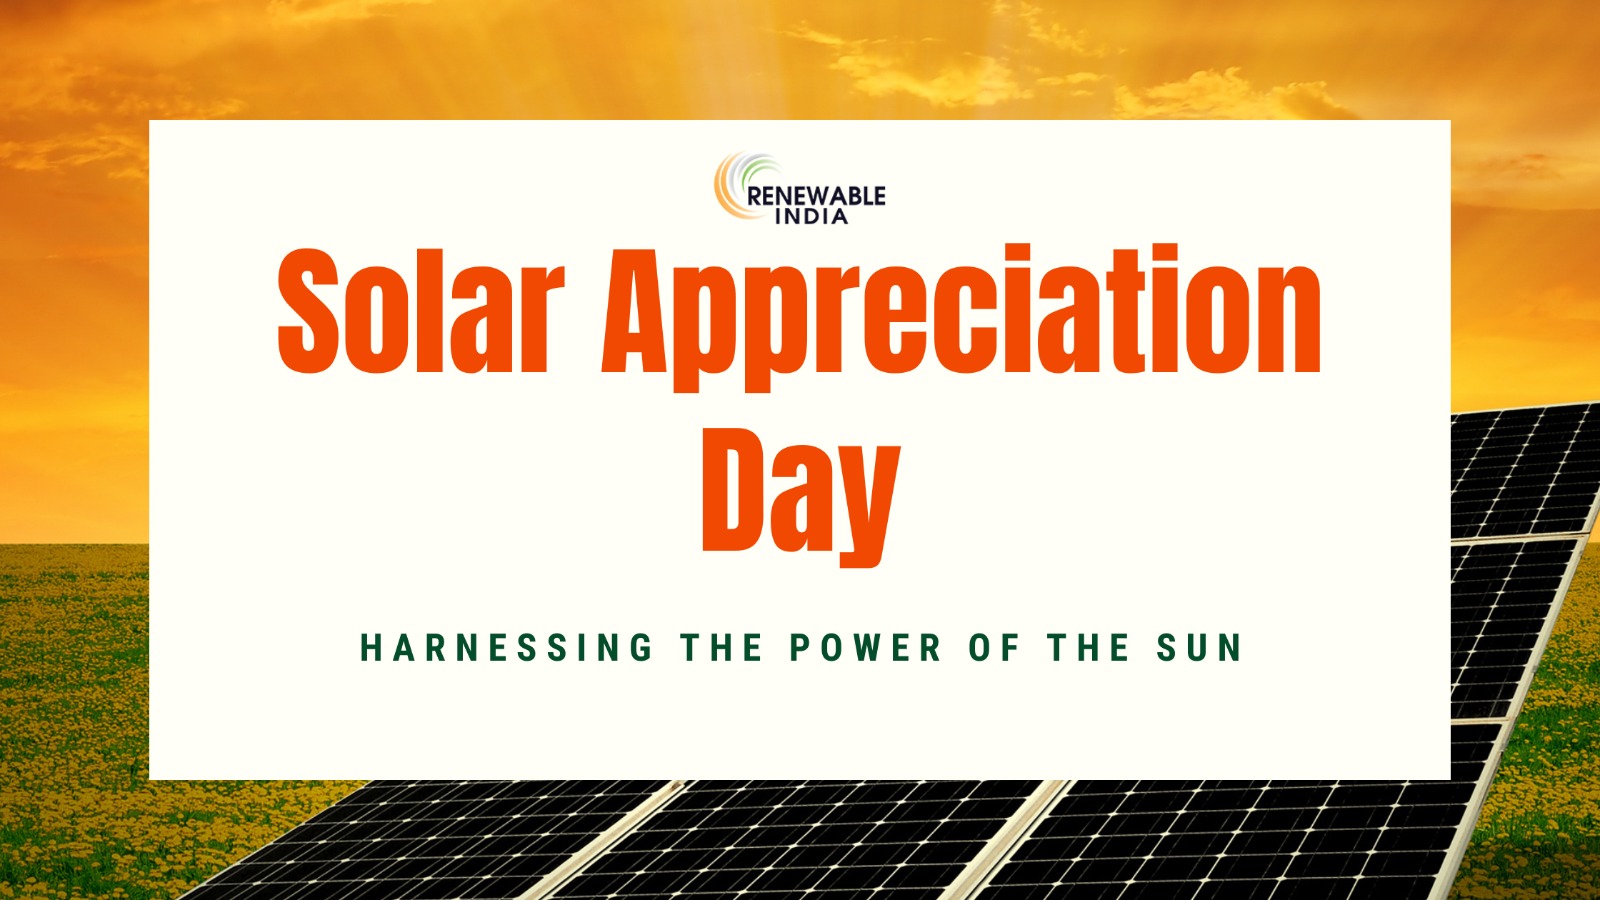 Solar appreciation day